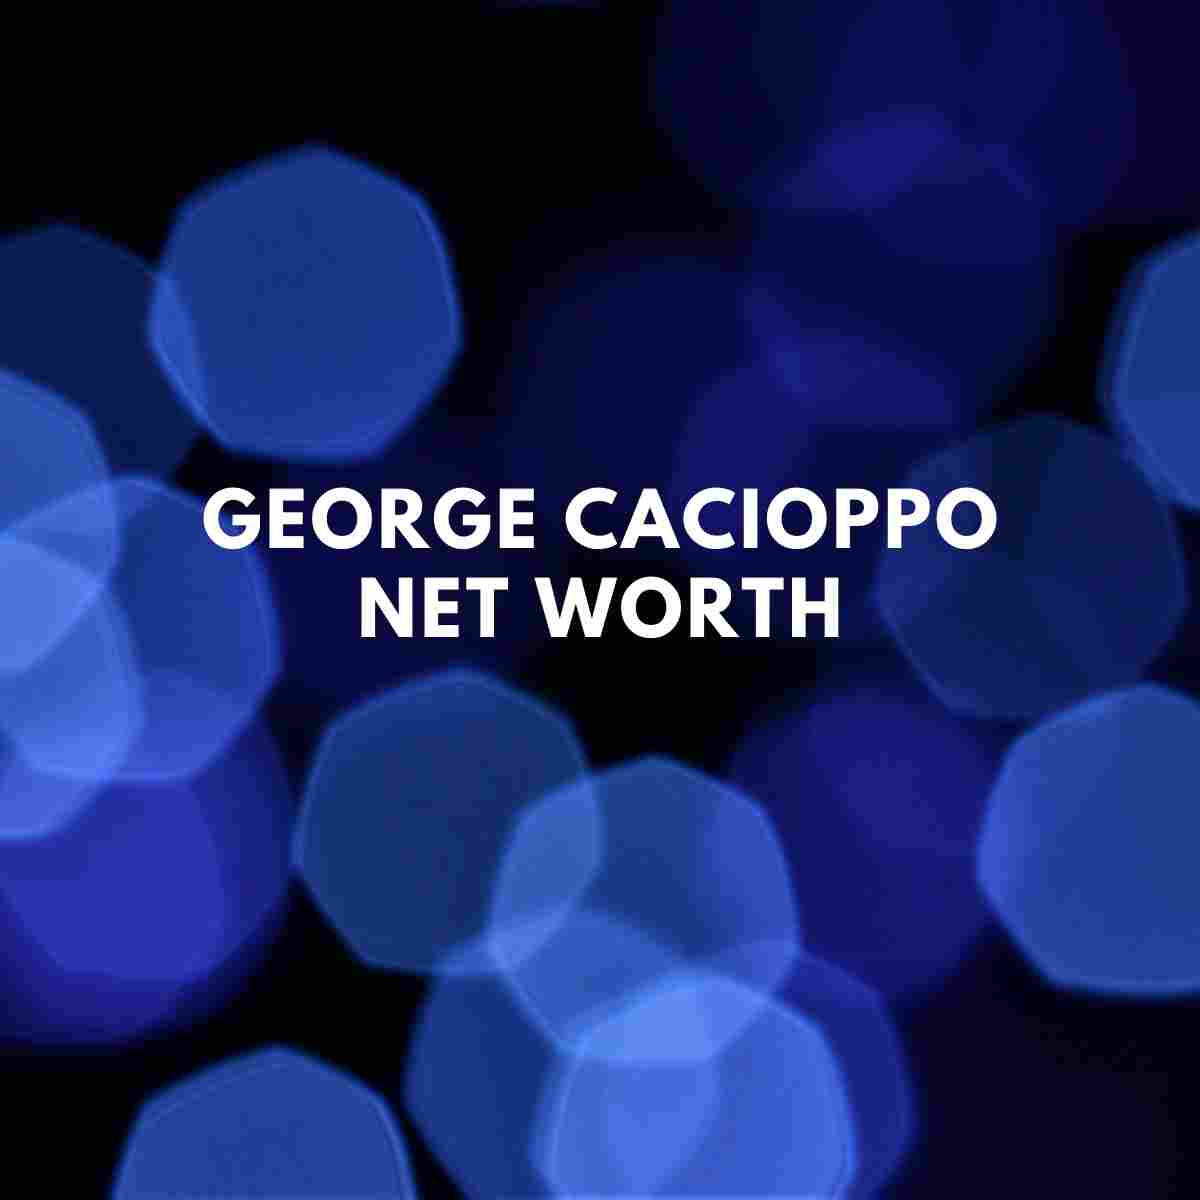 George Cacioppo NET WORTH